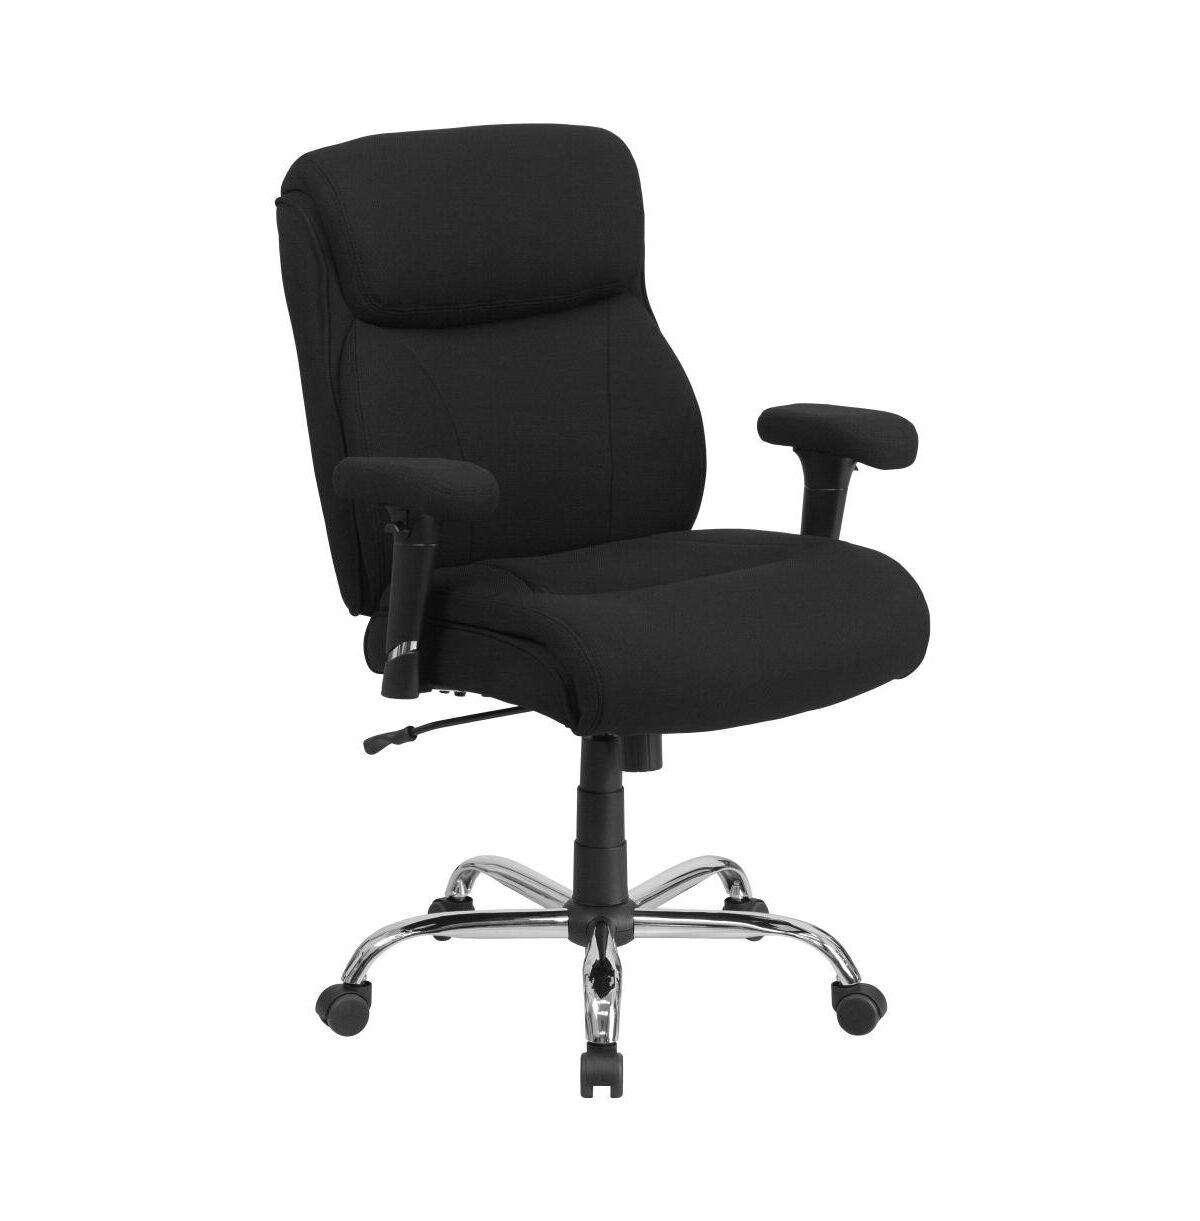 Emma+oliver 400 Lb. Big & Tall Mid-Back Swivel Clean Line Stitch Ergonomic Task Office Chair - Black fabric